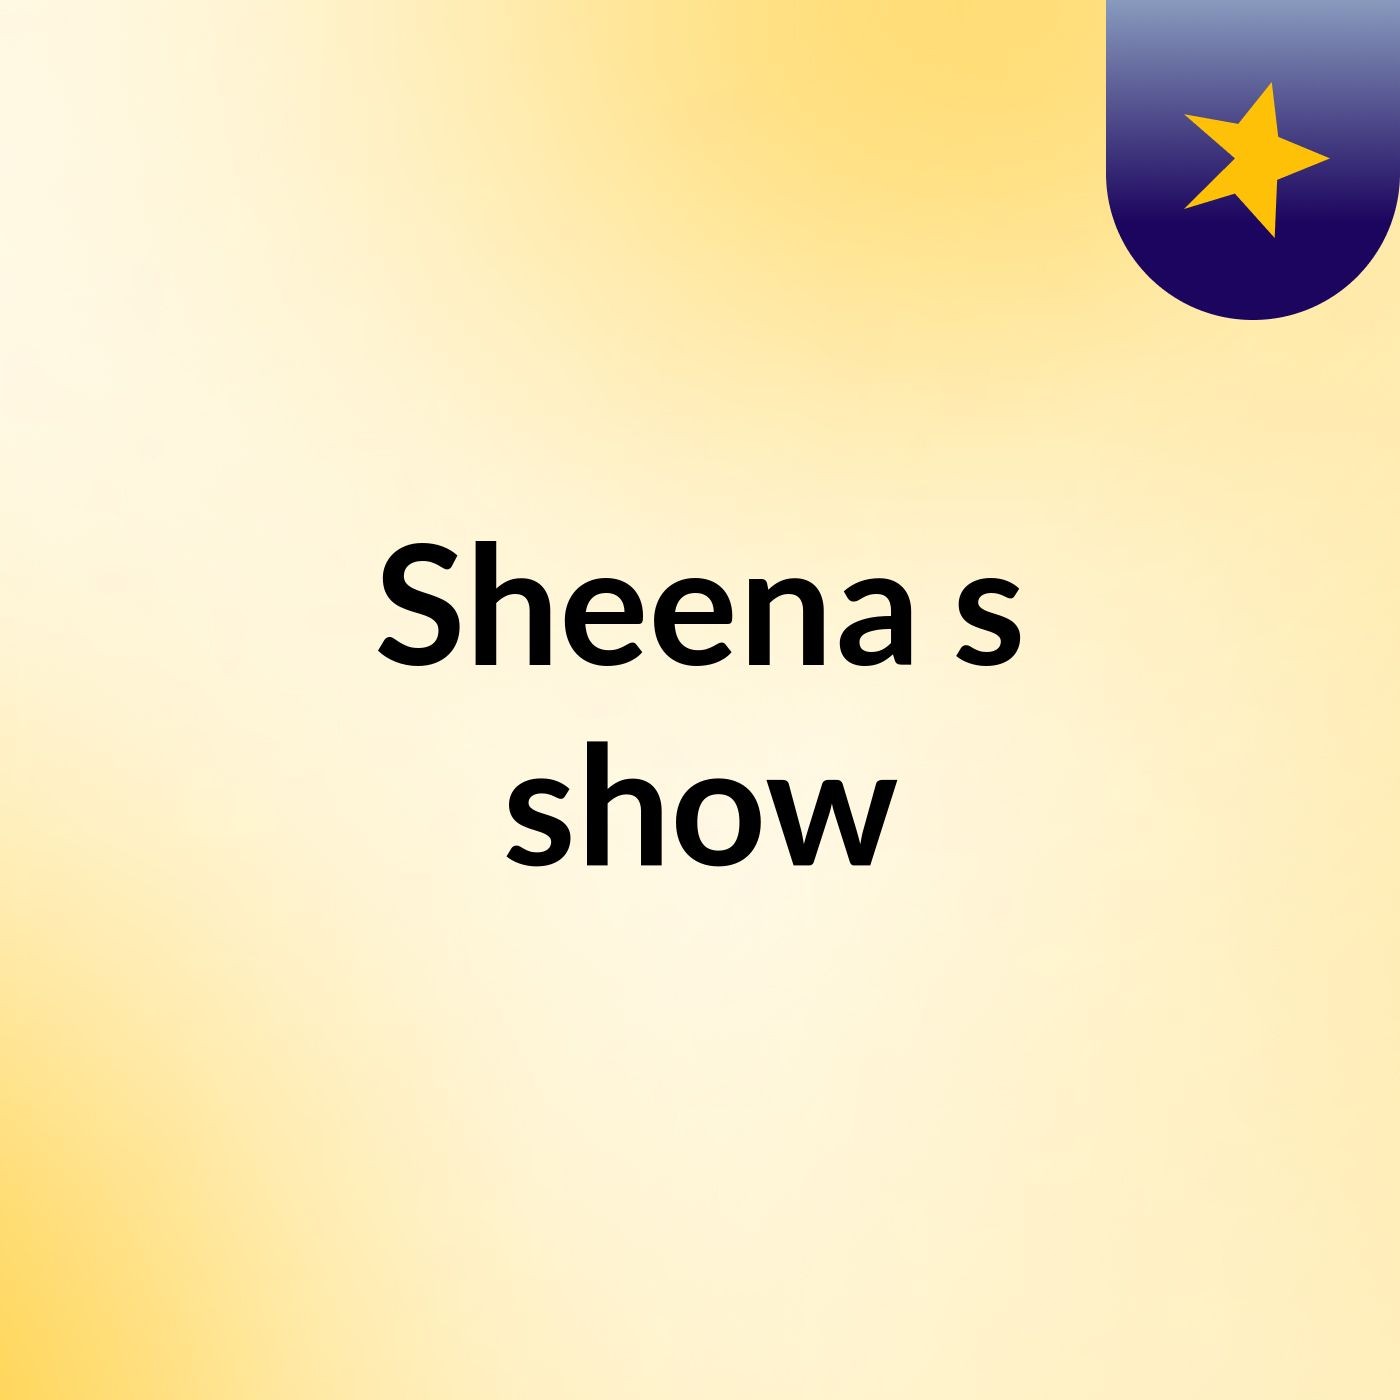 Sheena's show